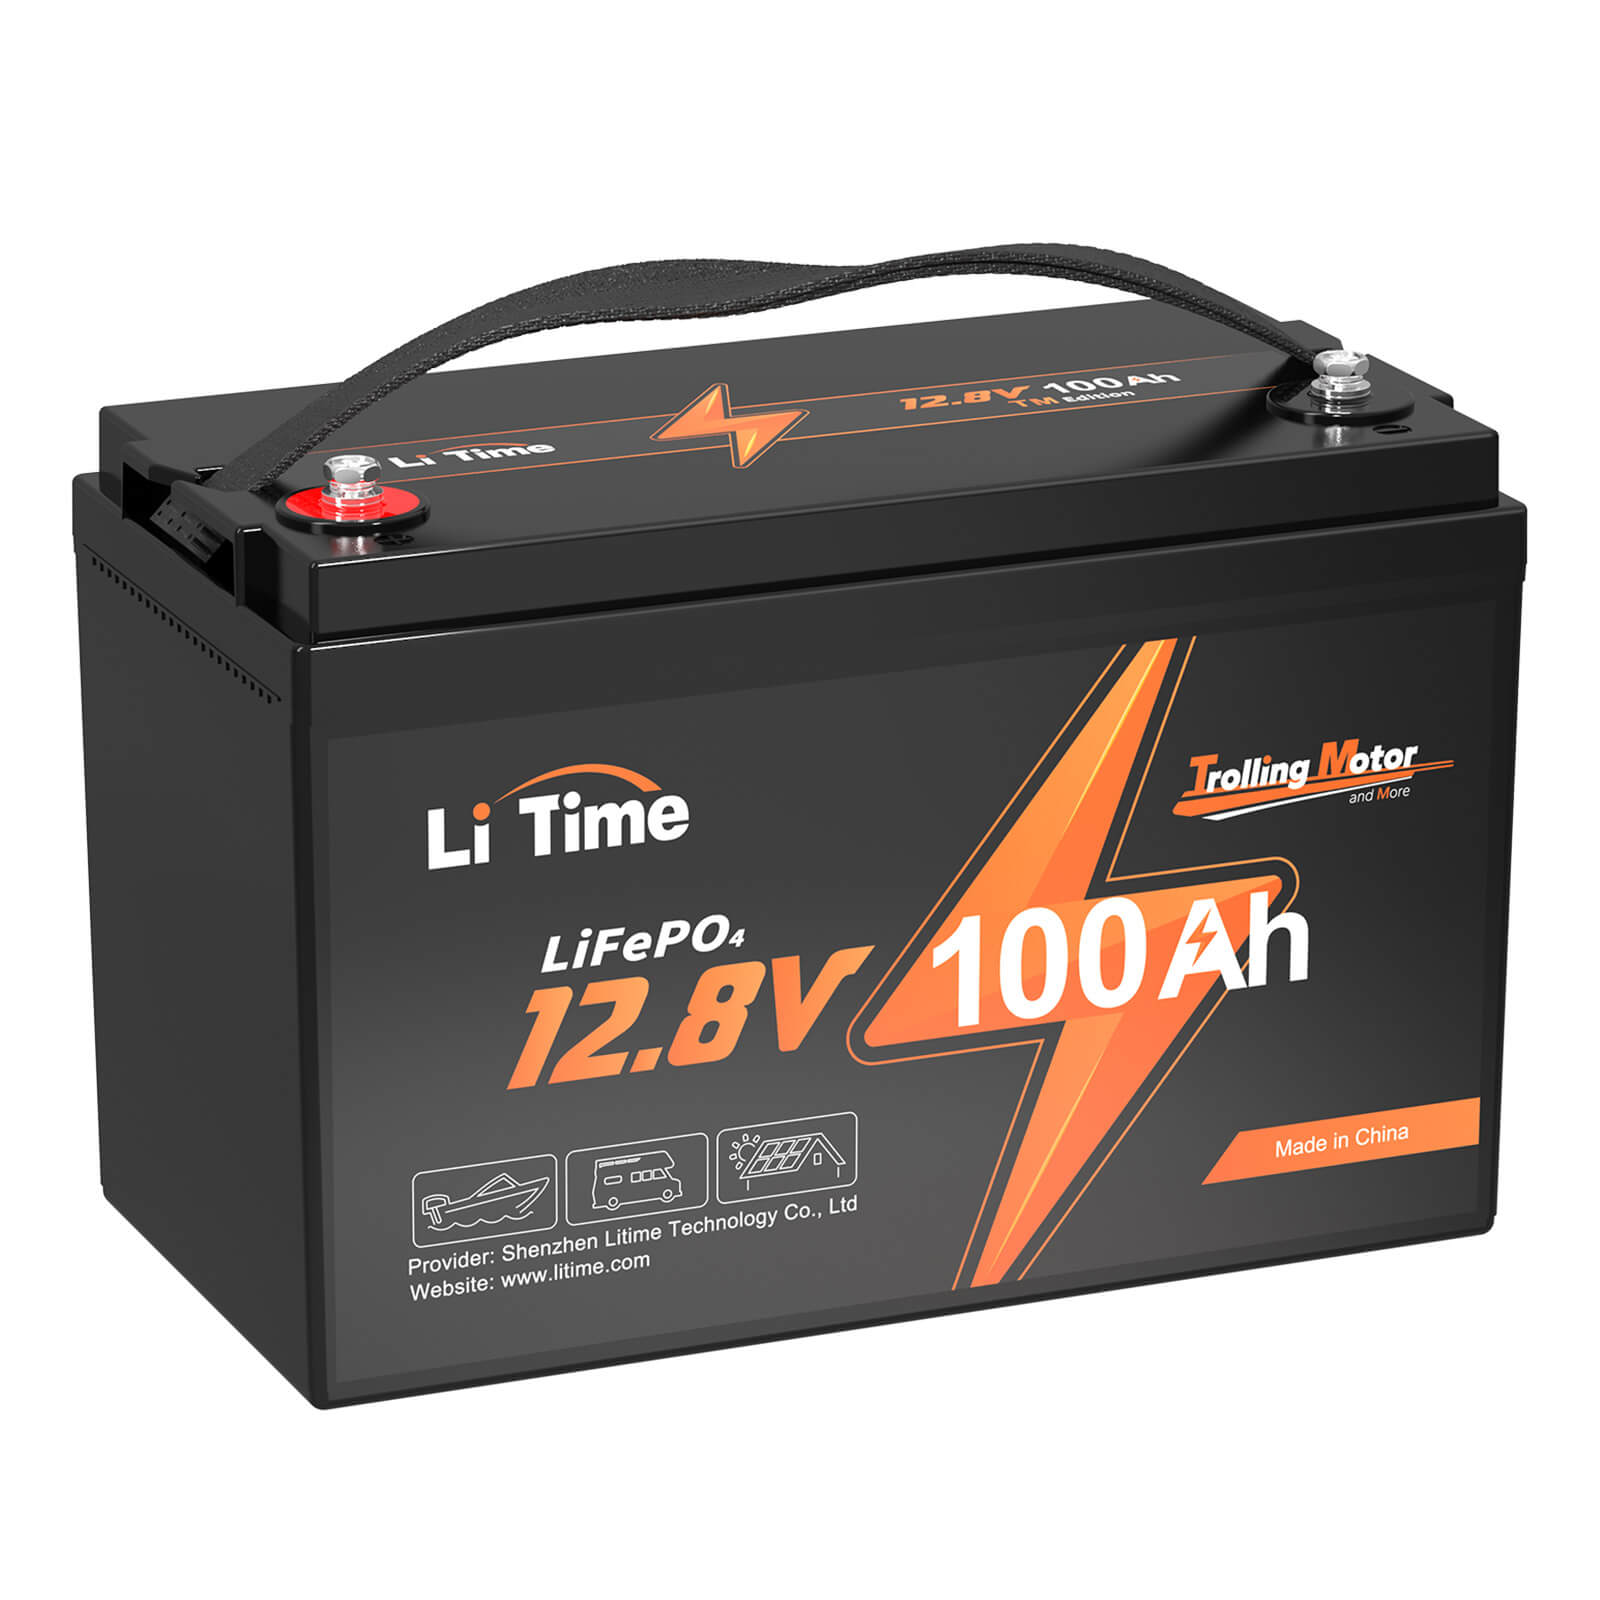 🔥Endpreis: €243.69🔥【0% MwSt.】LiTime 12V 100Ah TM LiFePO4 Batterie, Tieftemperaturschutz für Trollingmotor